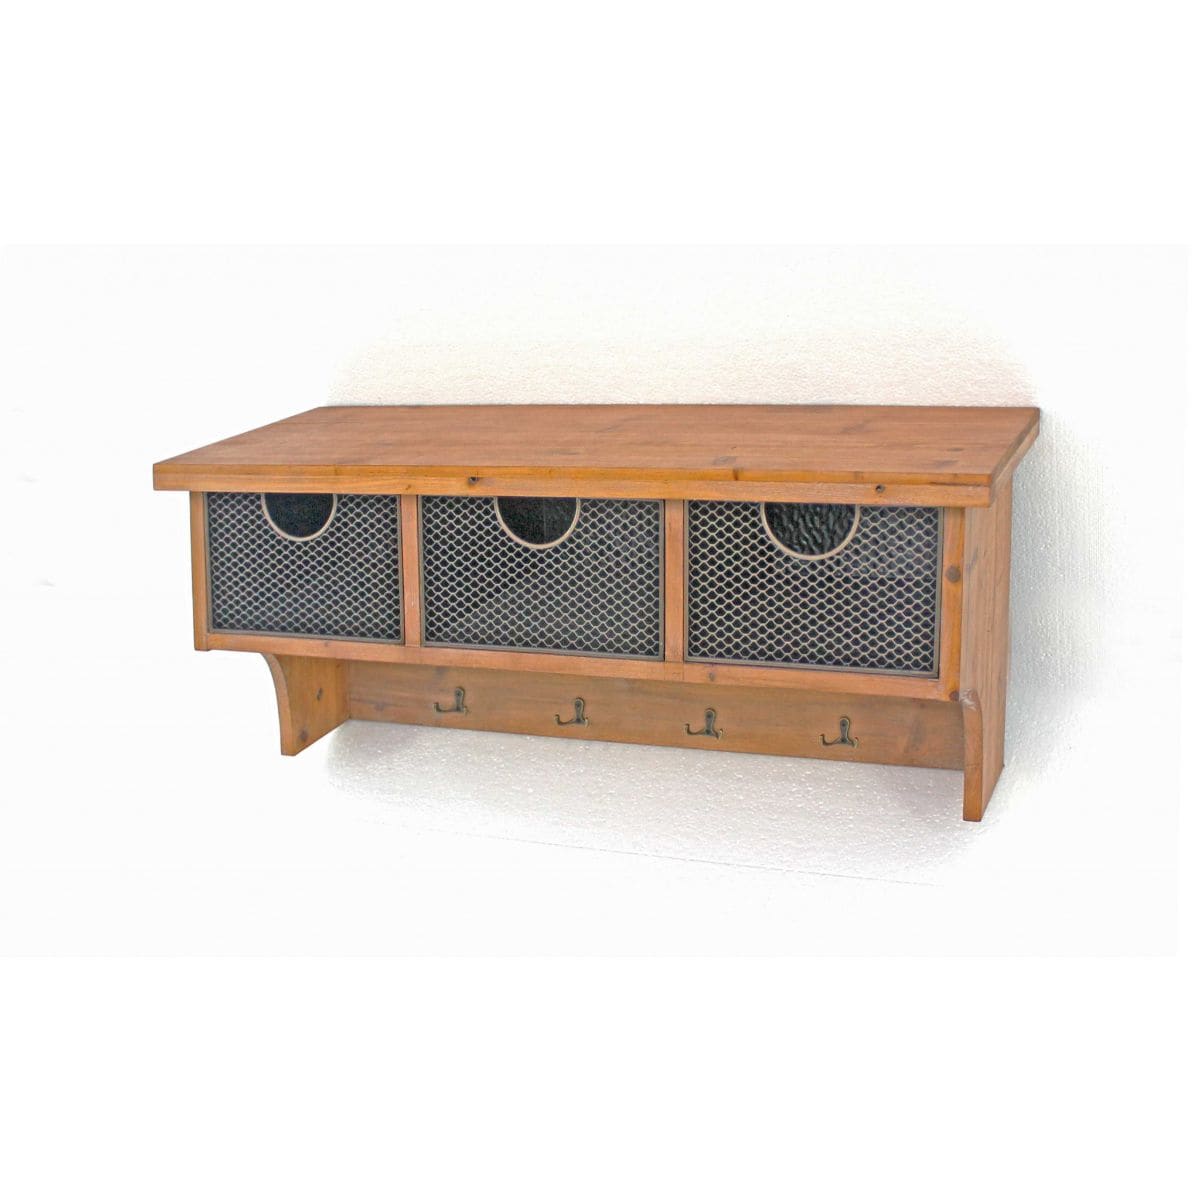 Wood Organizer Shelf with Drawers and Hooks